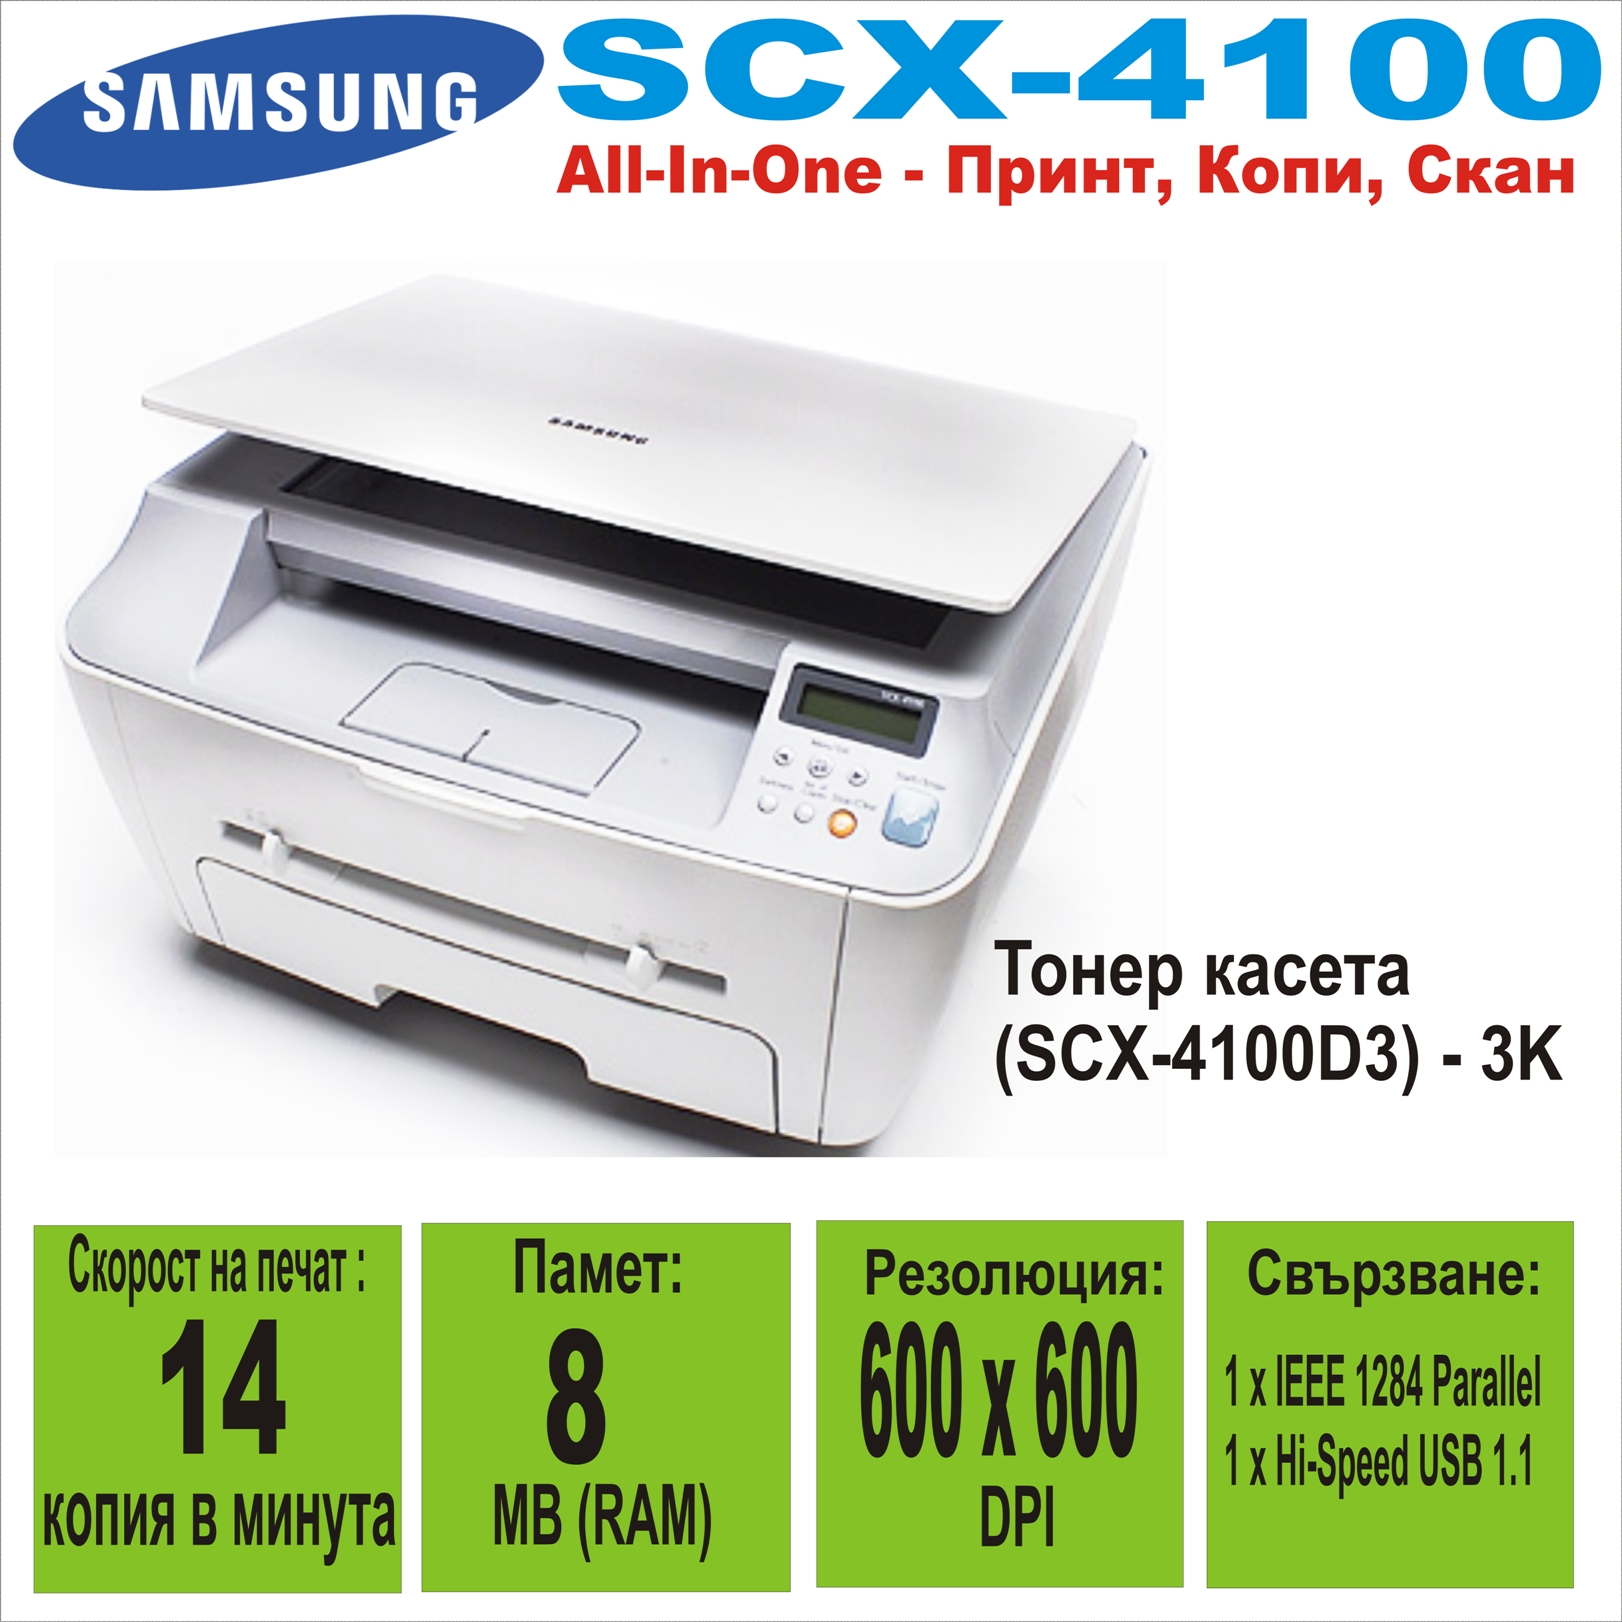 All-in-One Printer Samsung SCX-4100